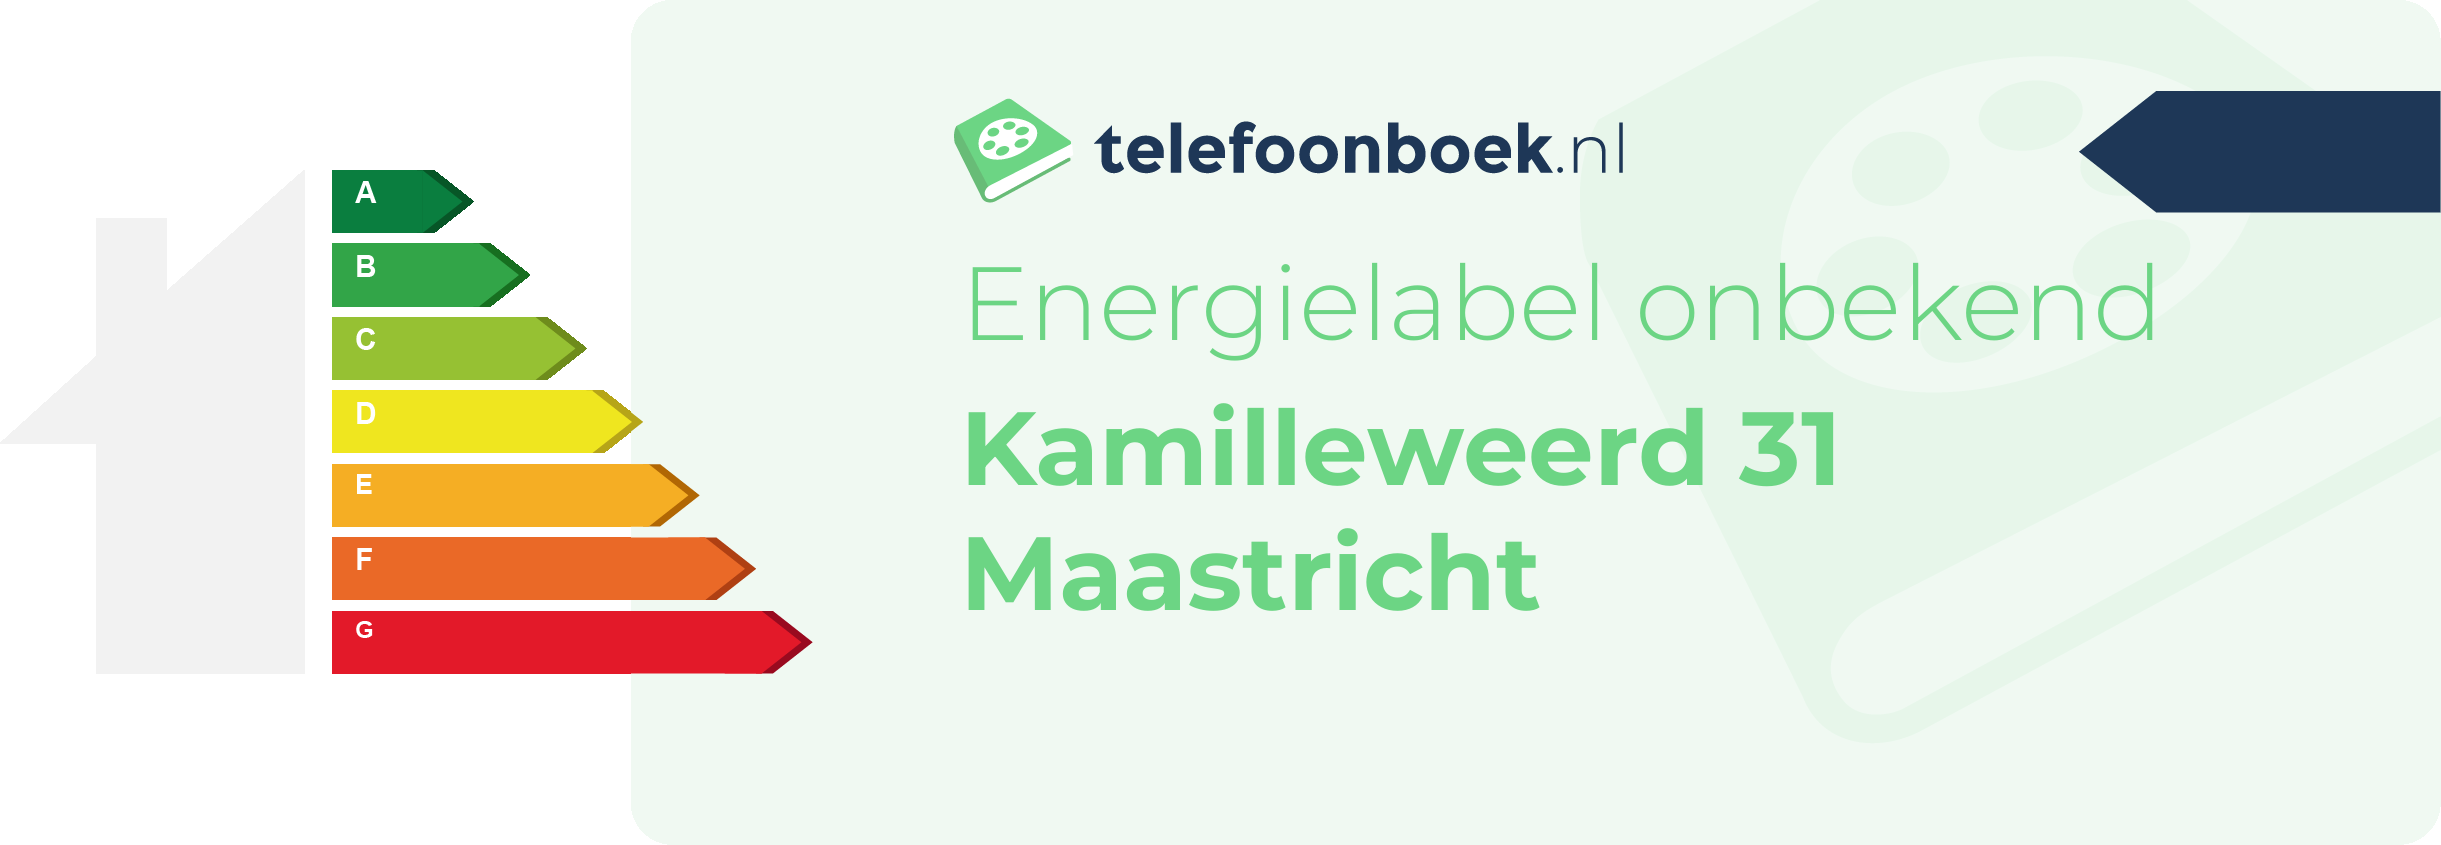 Energielabel Kamilleweerd 31 Maastricht